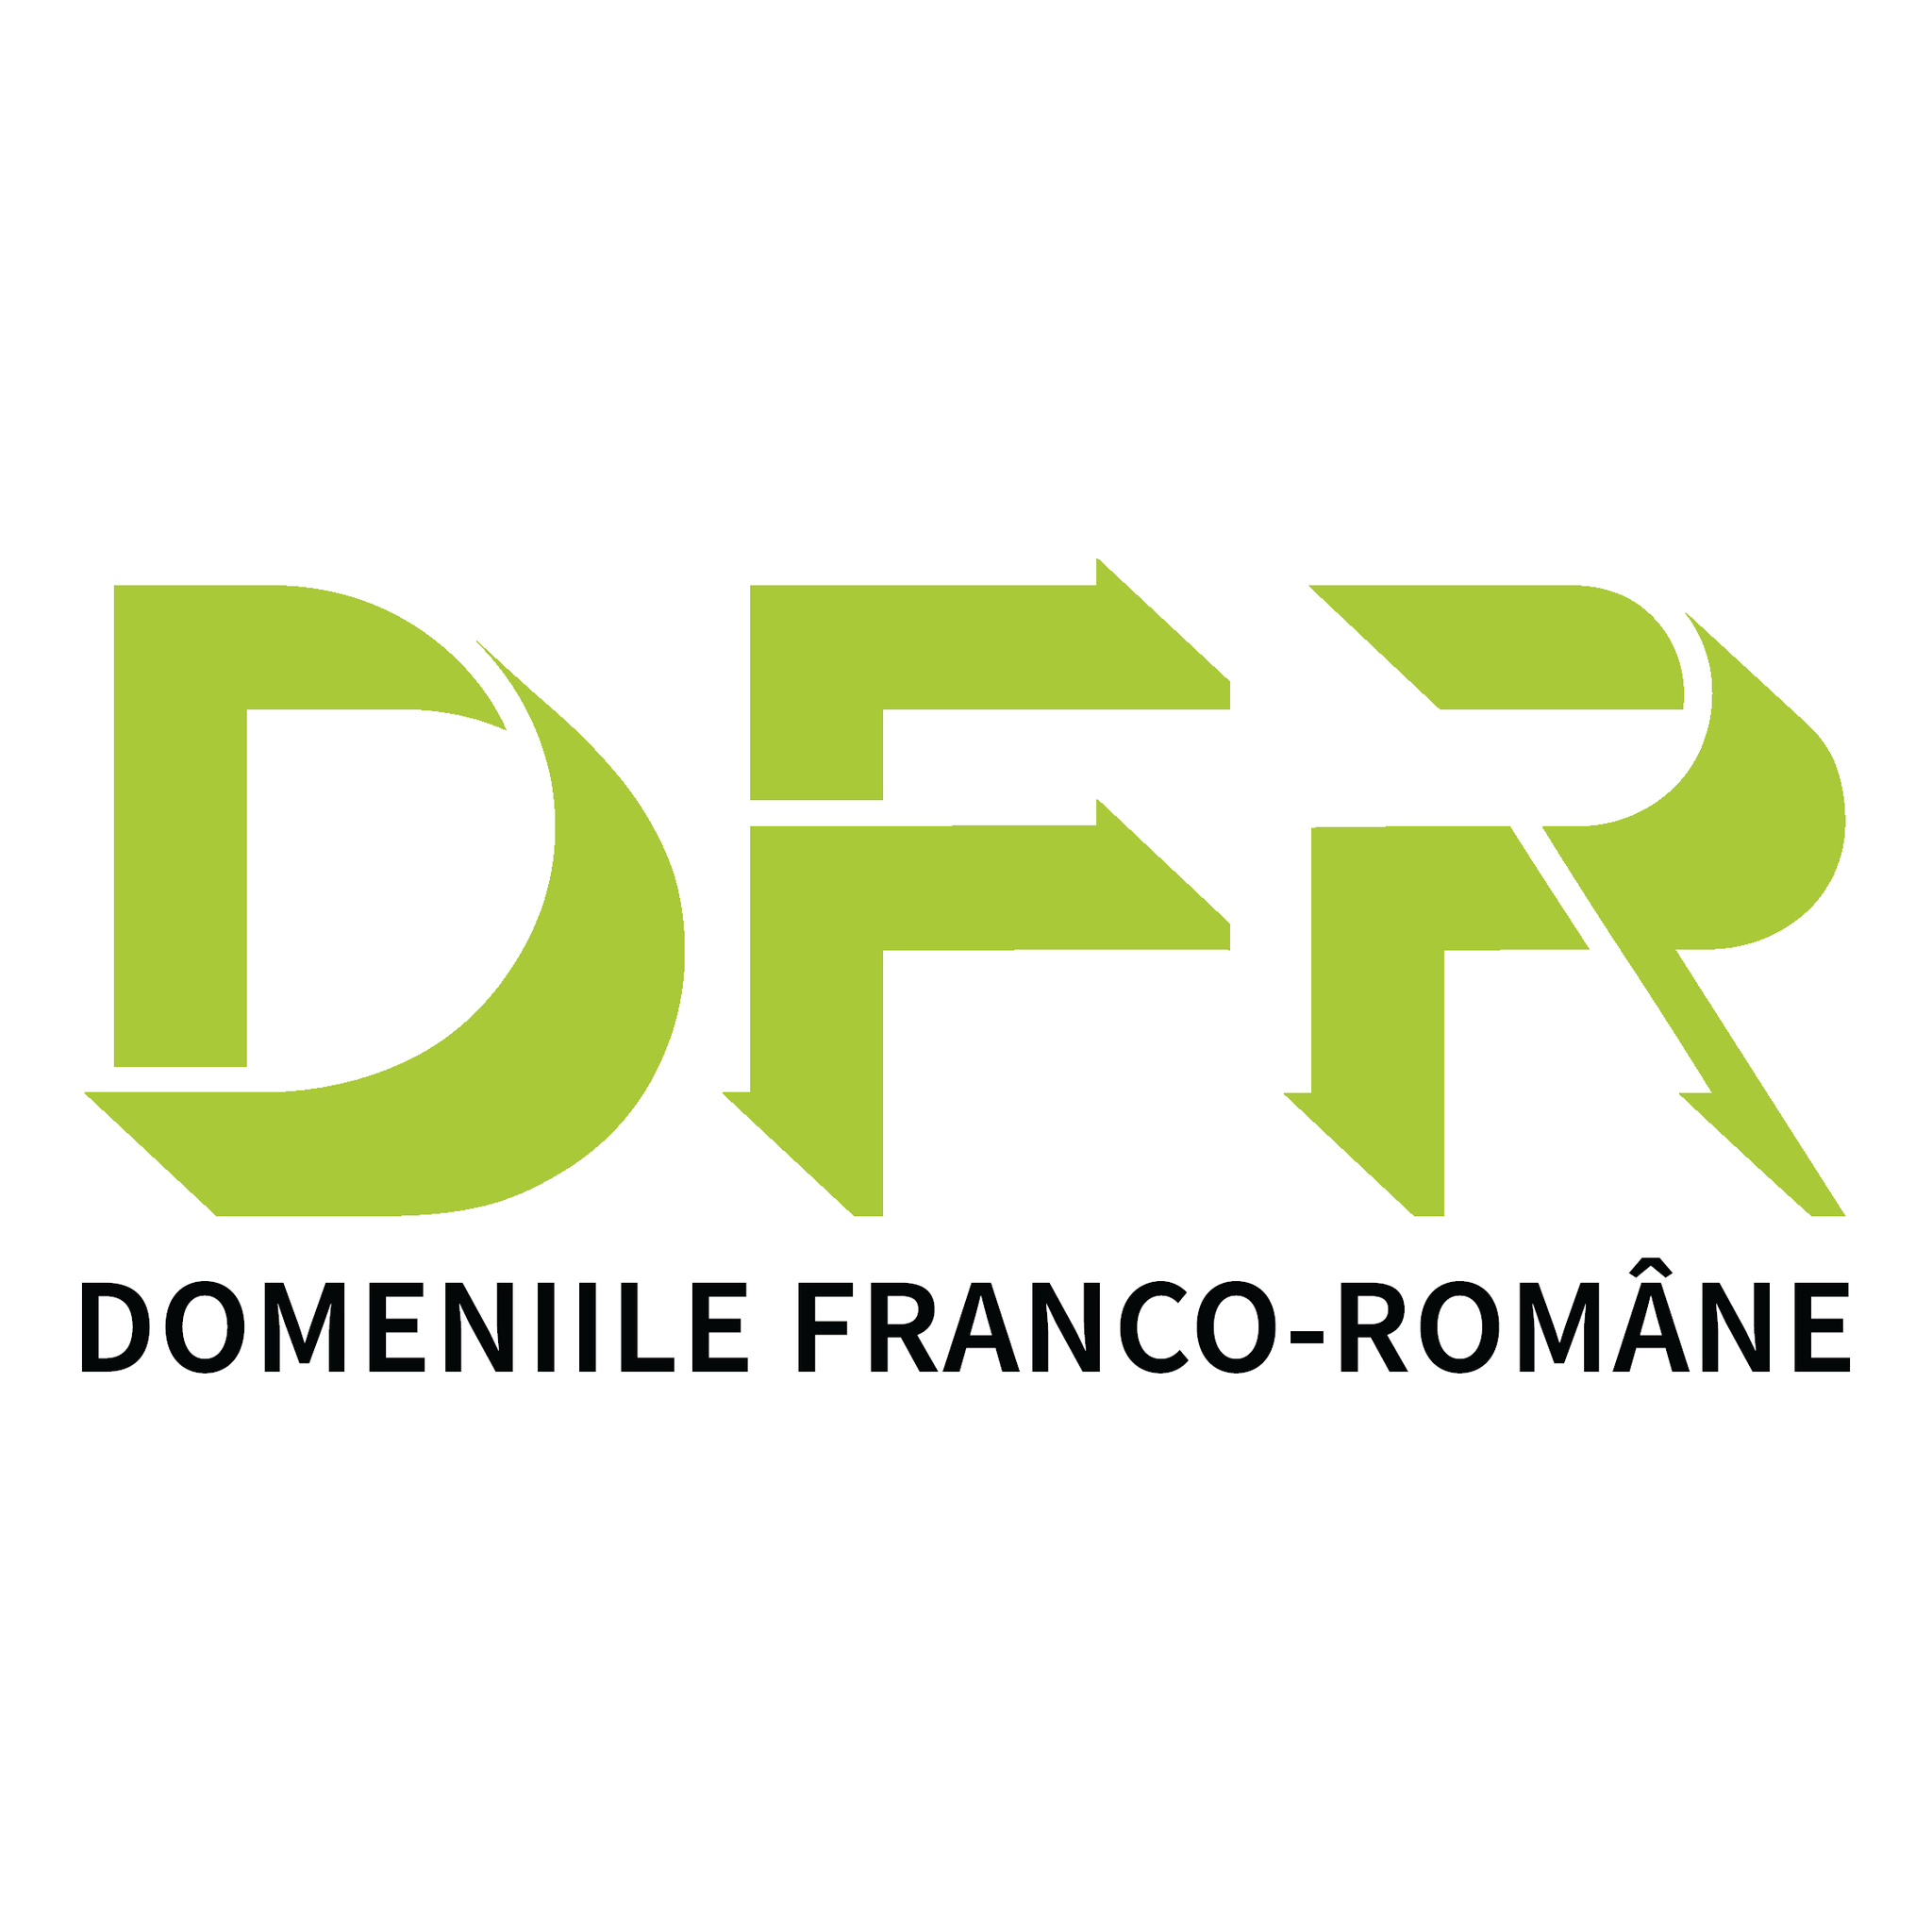 Domeniile Franco-Române